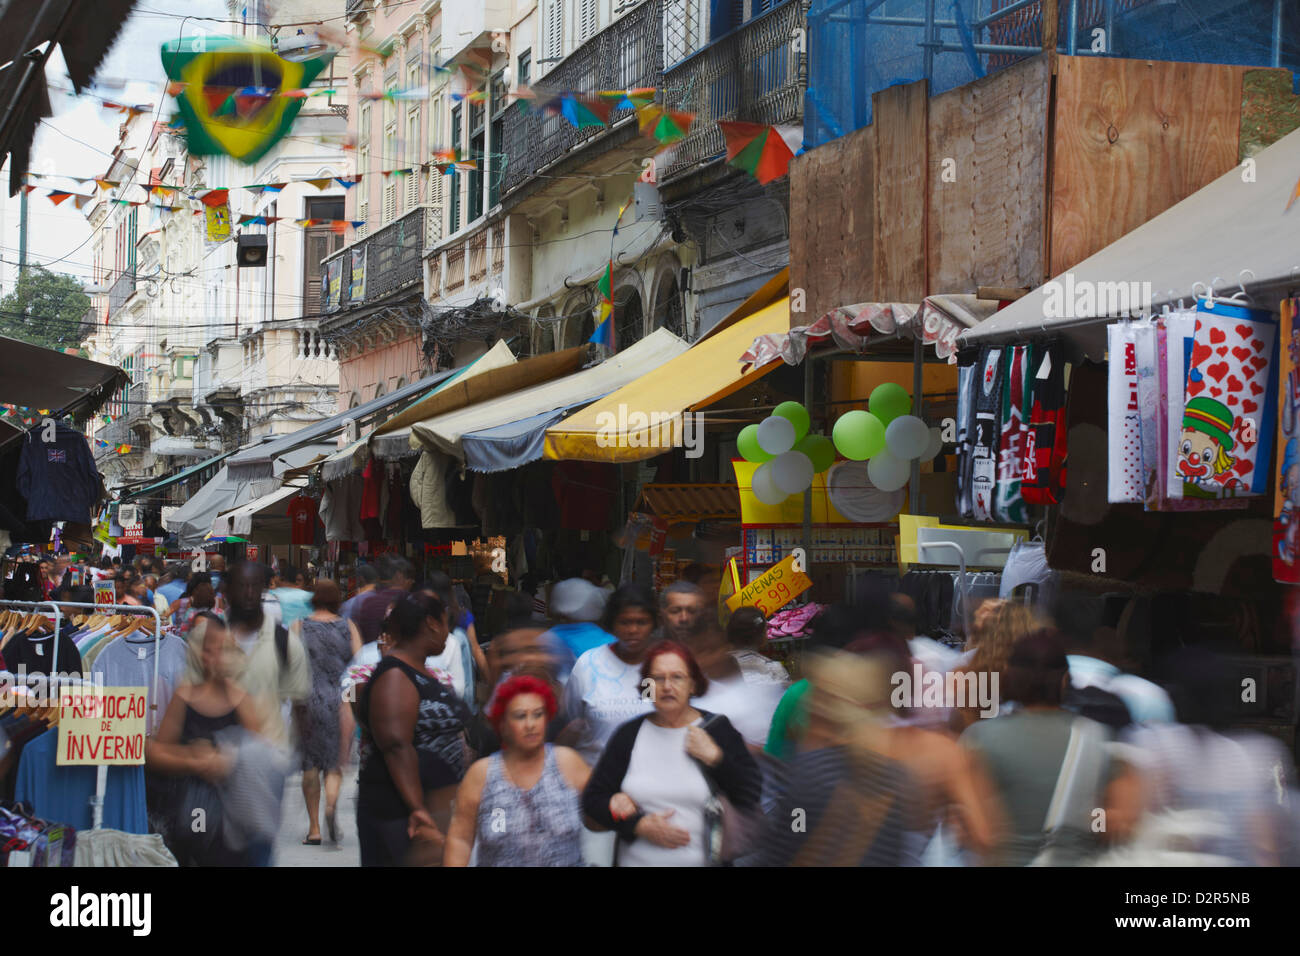 People walking along pedestrianised street of Saara district, Centro, Rio de Janeiro, Brazil, South America Stock Photo